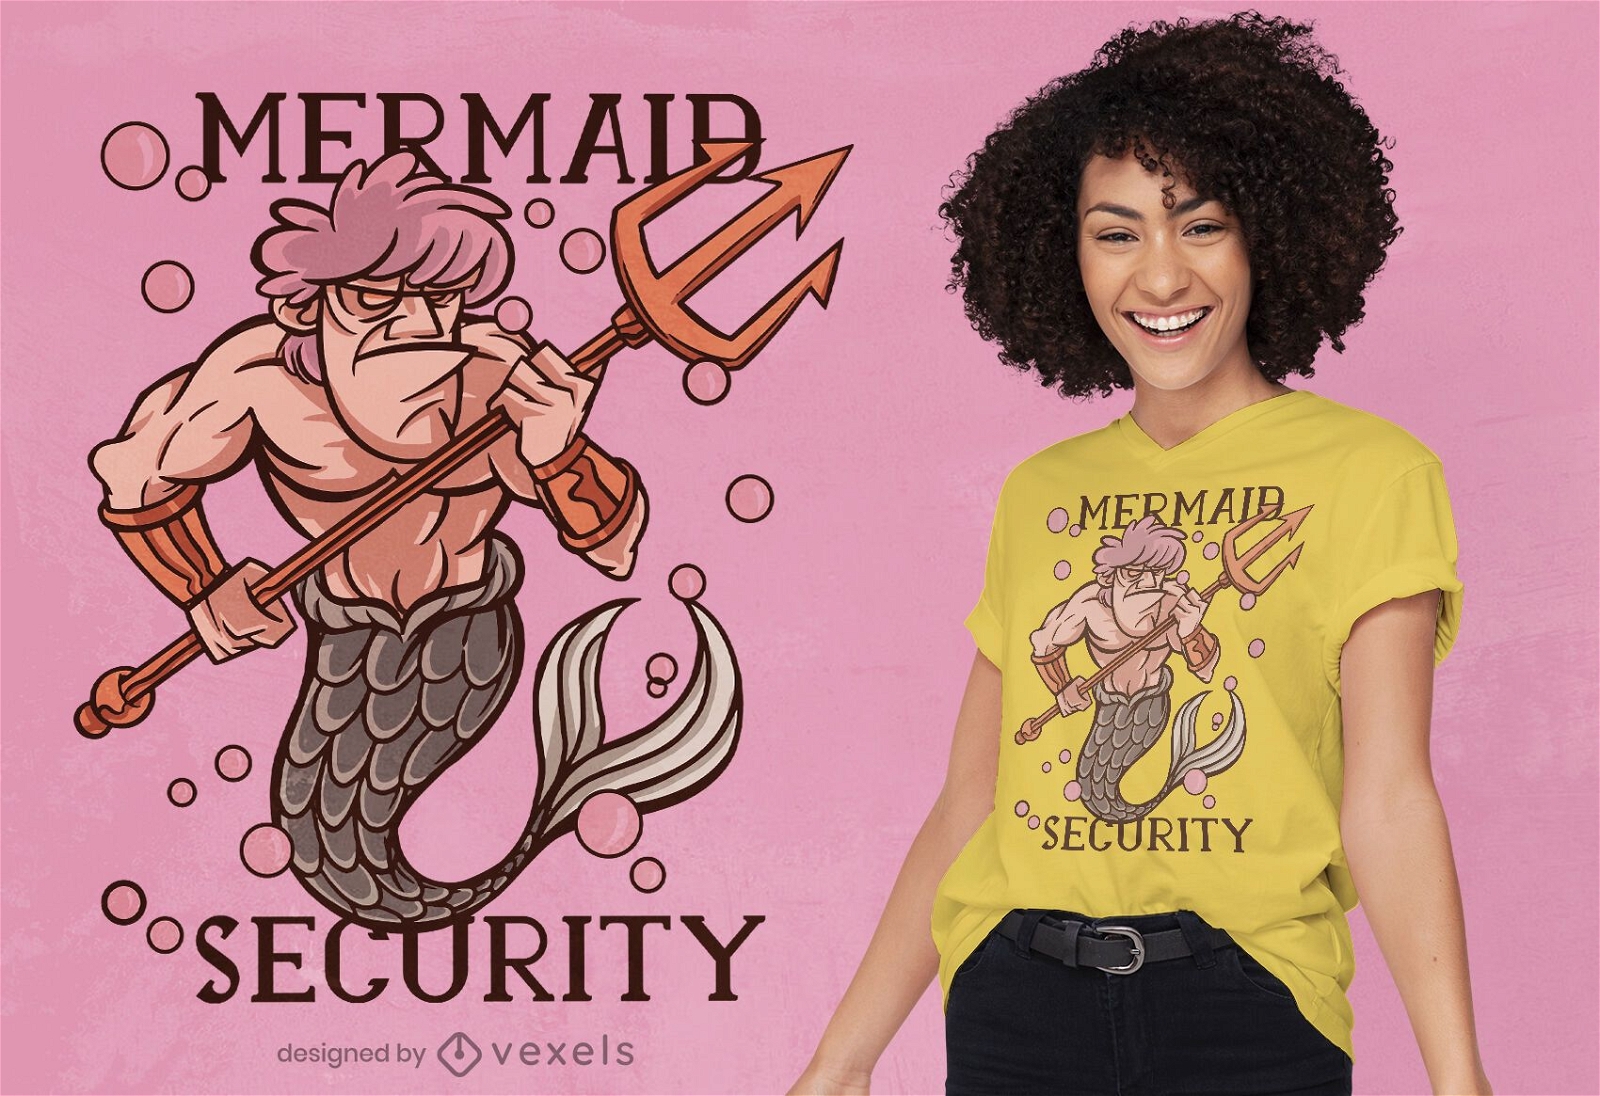 Mermaid man trident t-shirt design